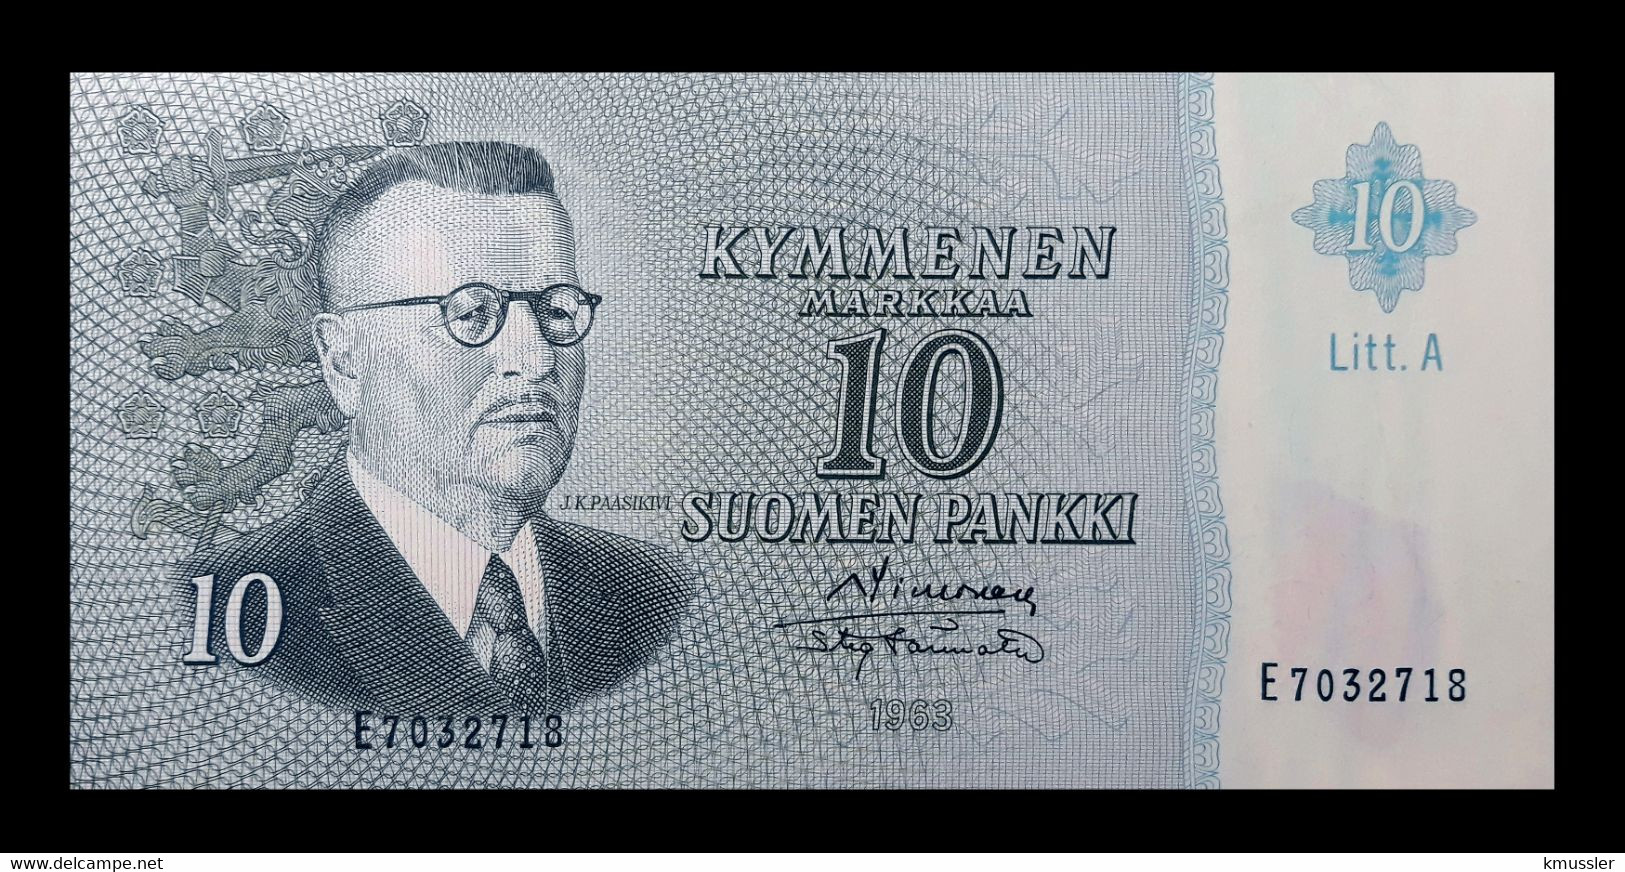 # # # Banknote Finnland (Finland) 10 Markkaa 1963 Lit. A UNC # # # - Finlande